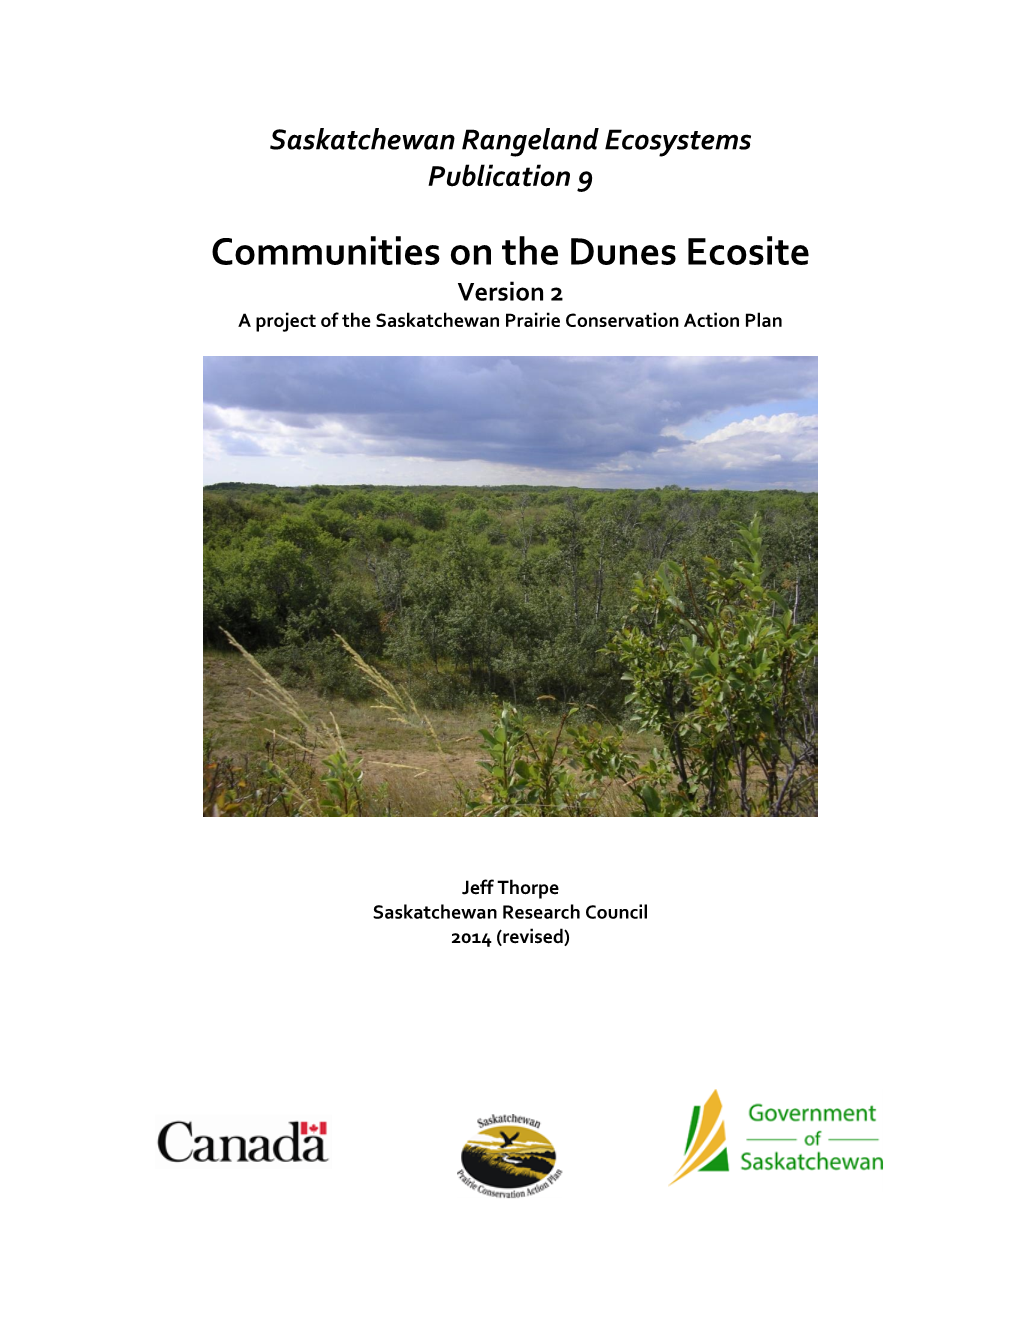 Communities on the Dunes Ecosite Version 2 a Project of the Saskatchewan Prairie Conservation Action Plan